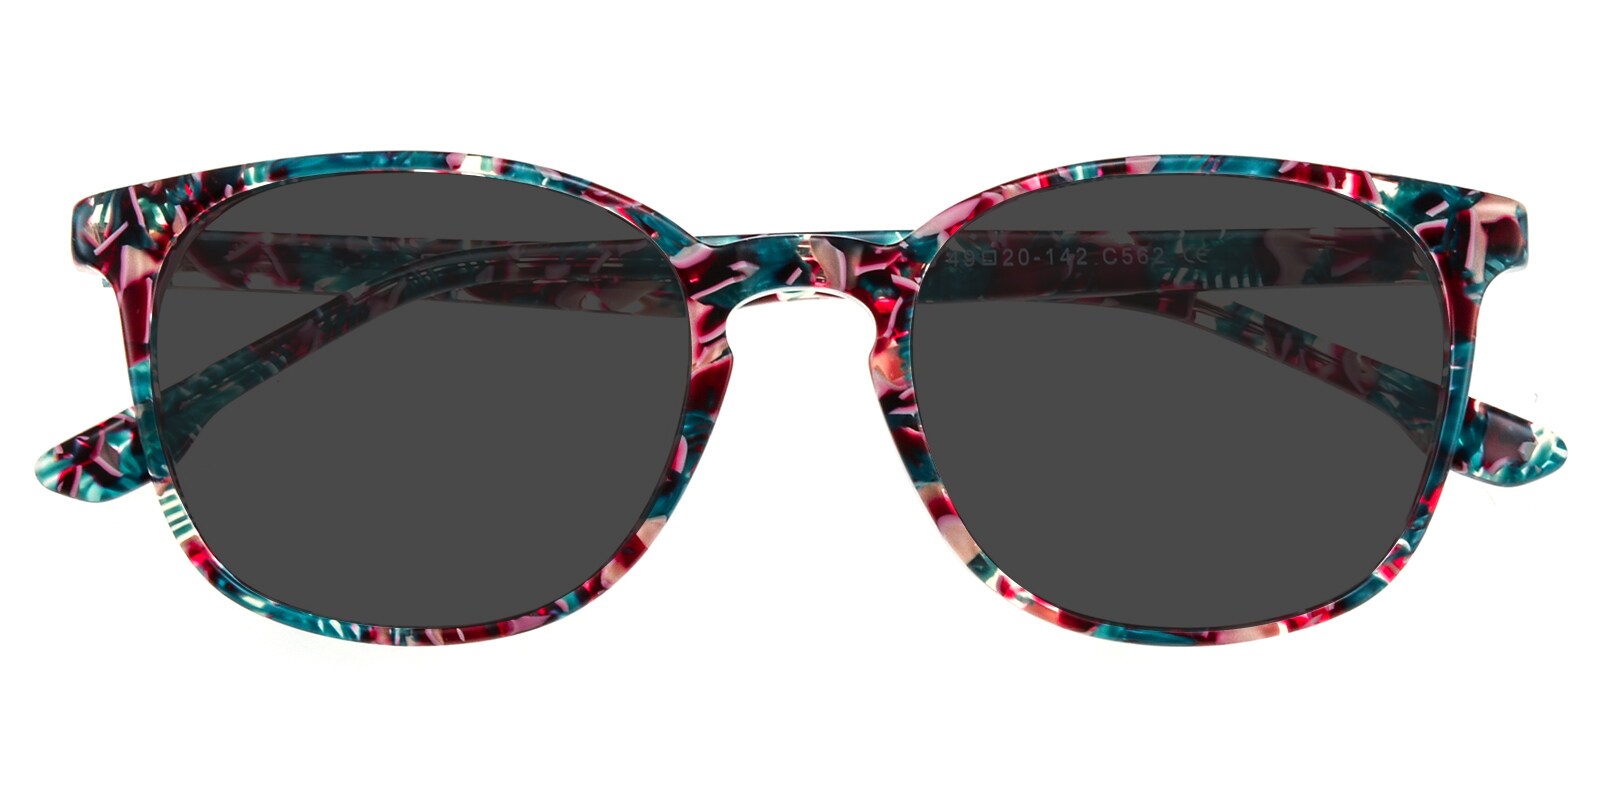 Pugs (L4) Life Style Sunglasses, UV400 With Black Lens & Multi Color Frame  | eBay